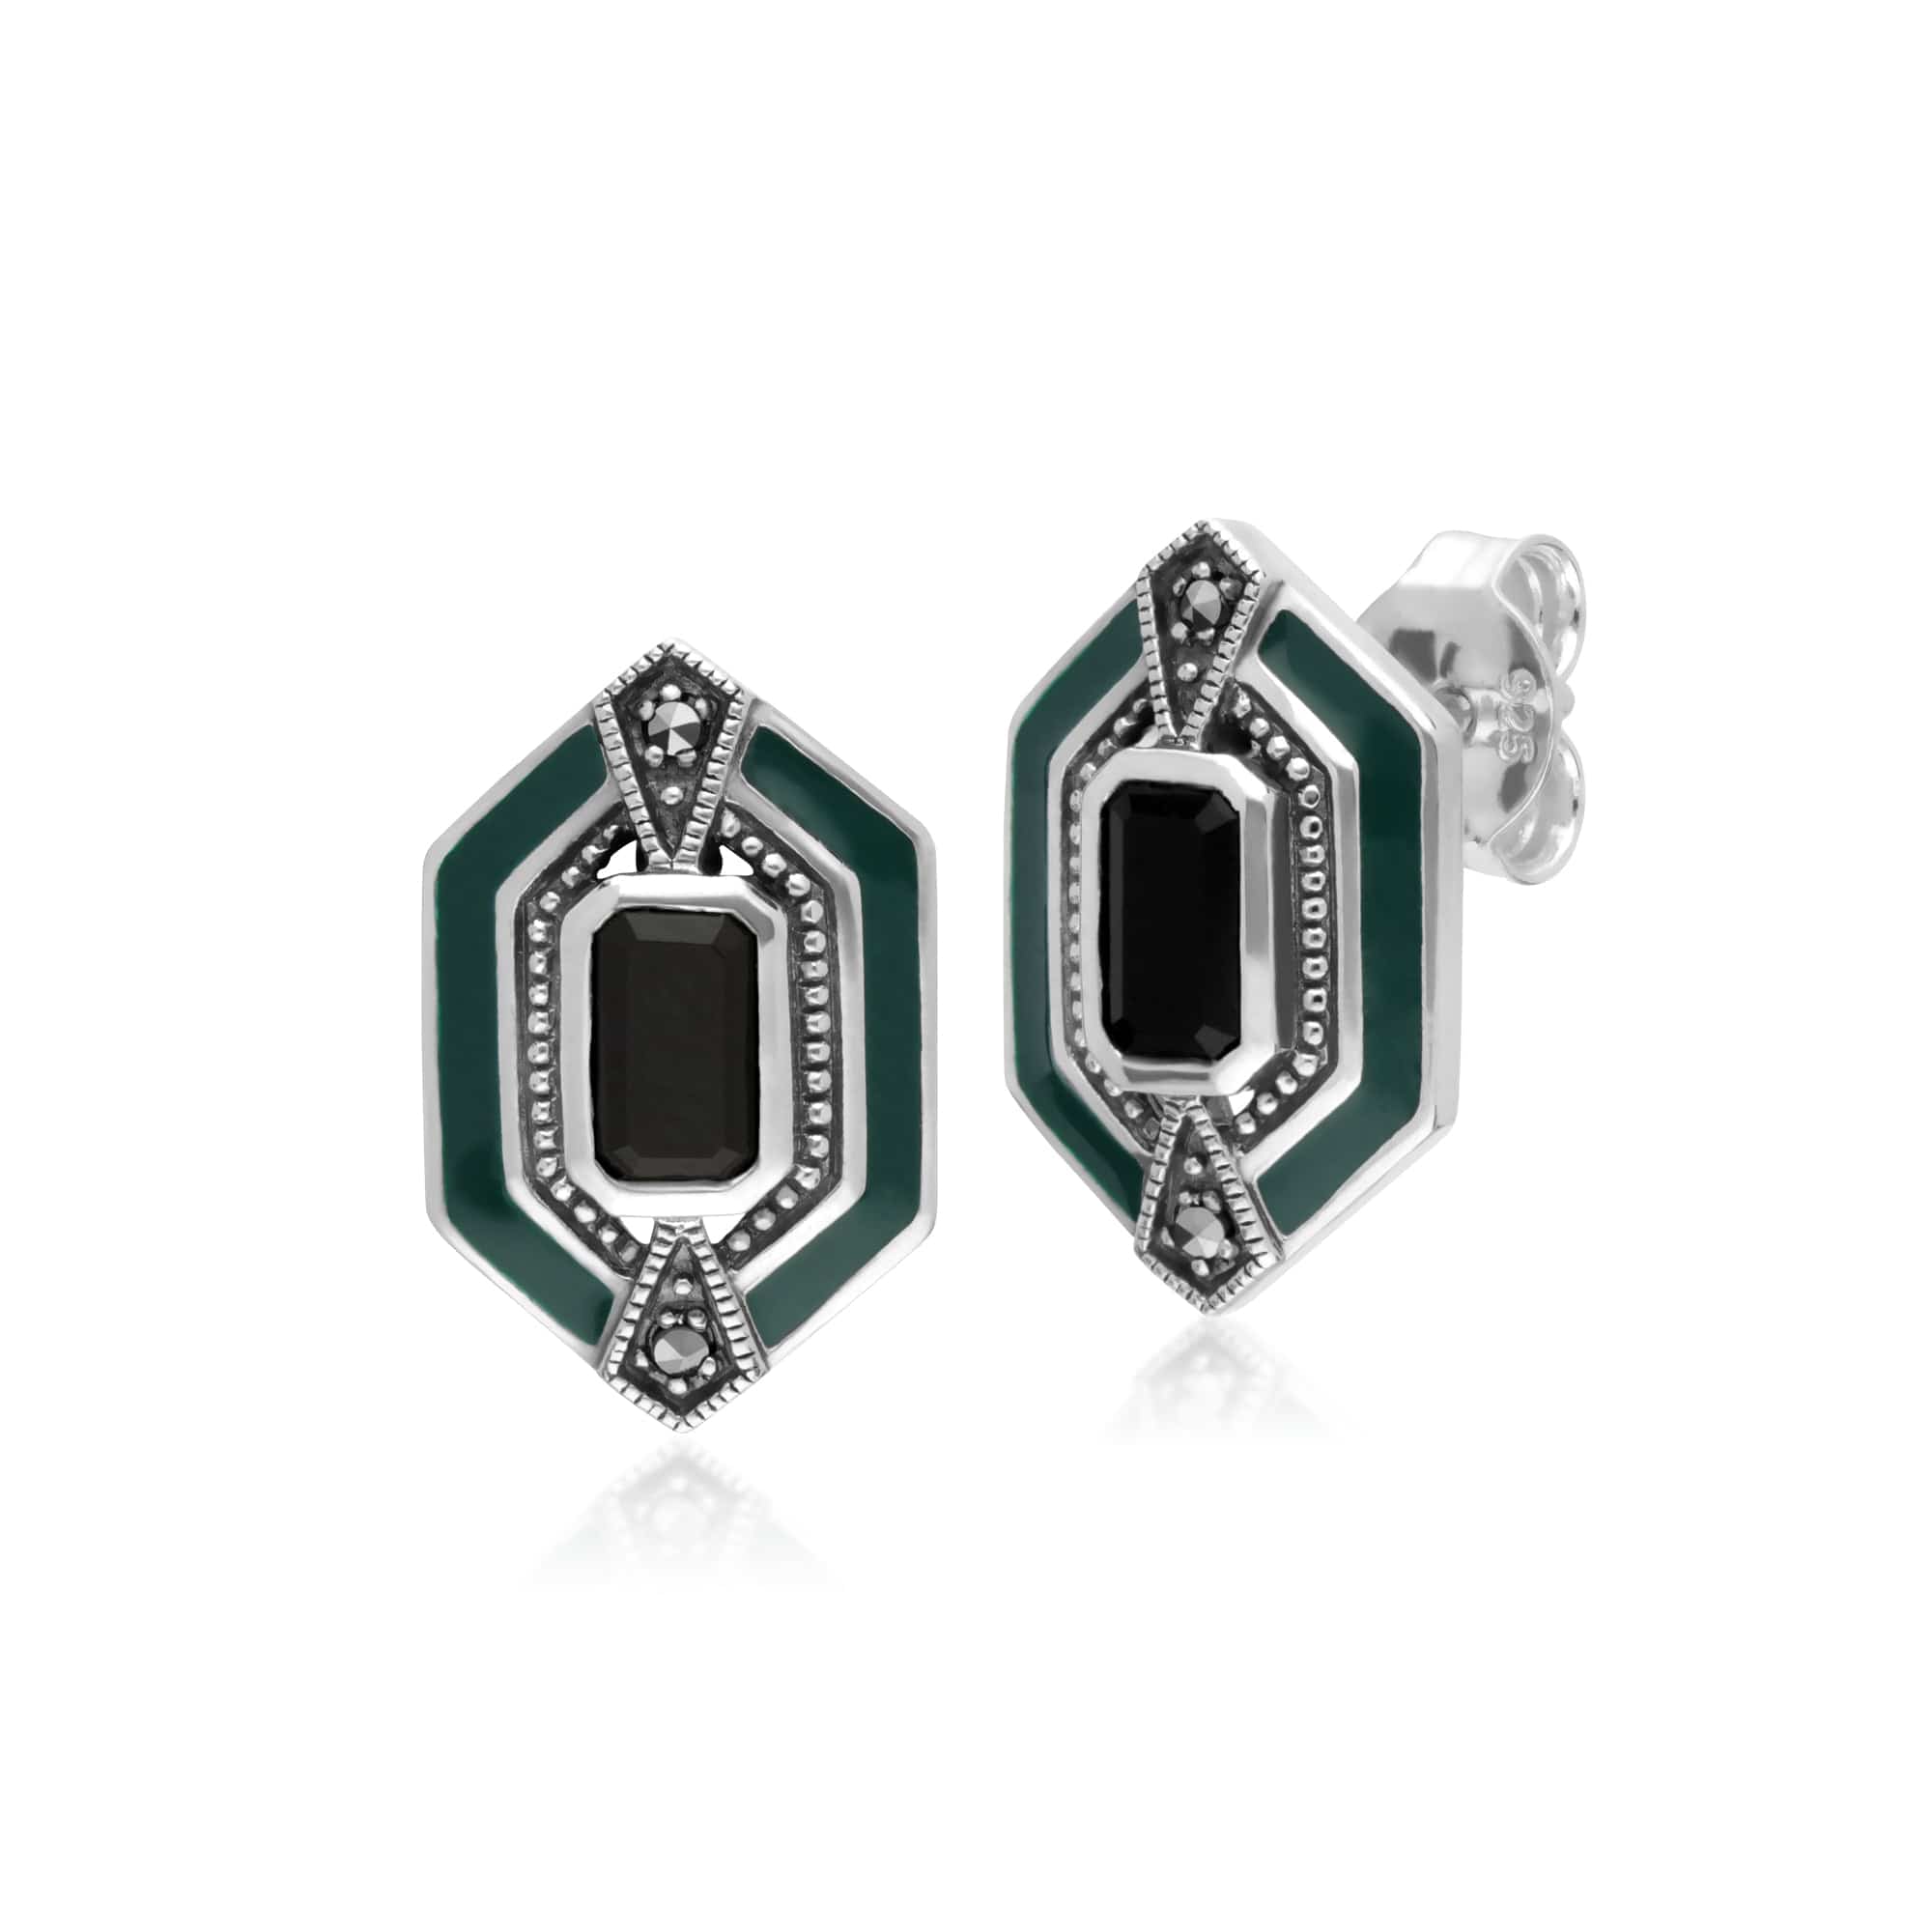 214P303401925-214L164504925 Art Deco Style Black Onyx, Marcasite & Green Enamel Hexagon Bracelet & Pendant Set in 925 Sterling Silver 2